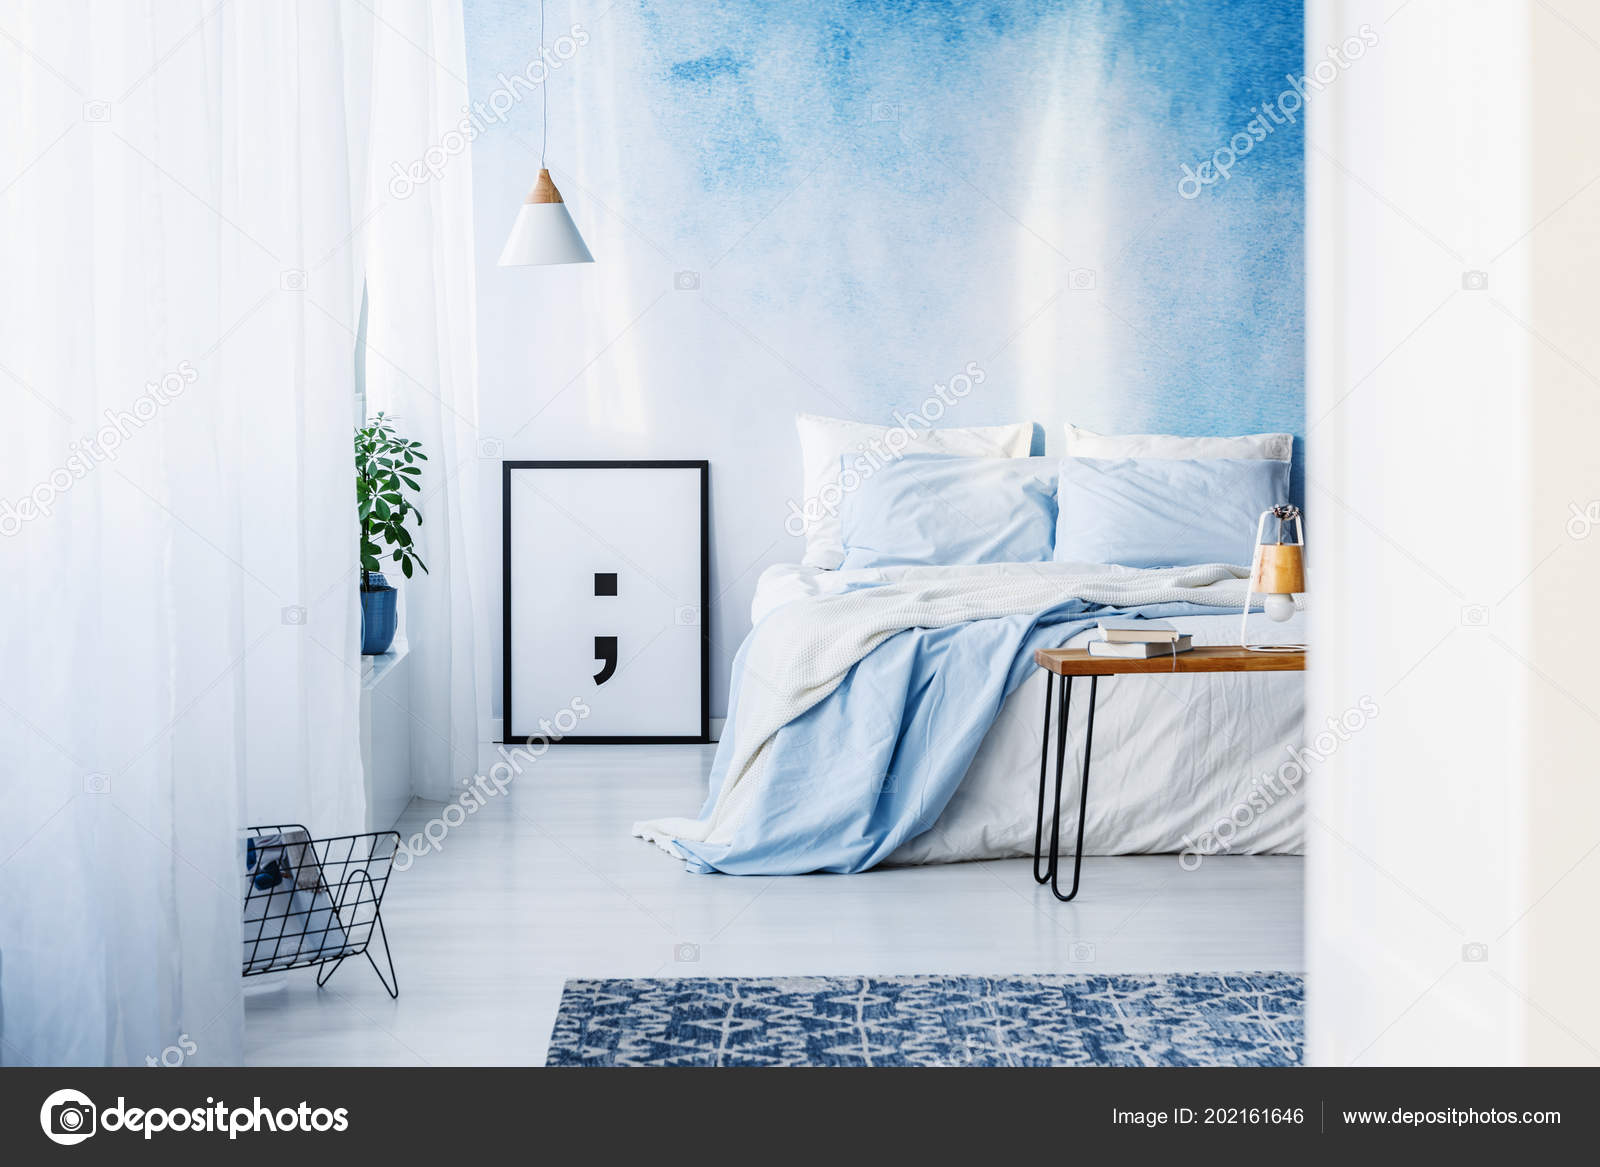 Ombre Wallpaper In A Room - HD Wallpaper 